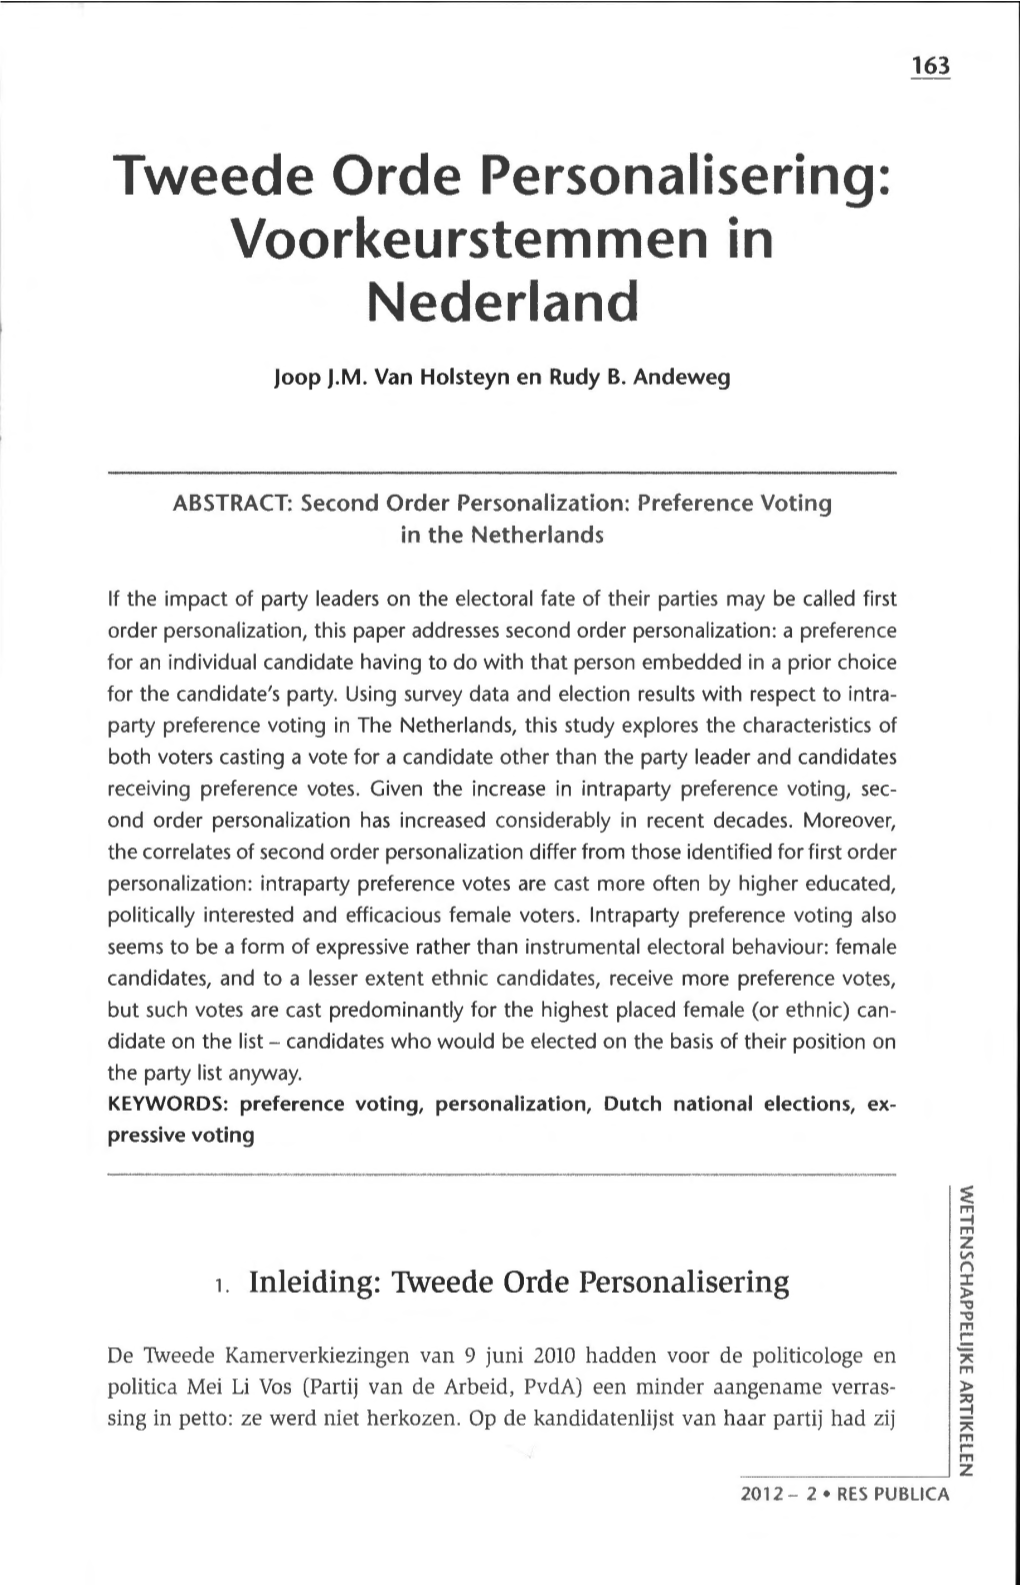 Tweede Orde Personalisering: Voorkeurstemmen in Nederland